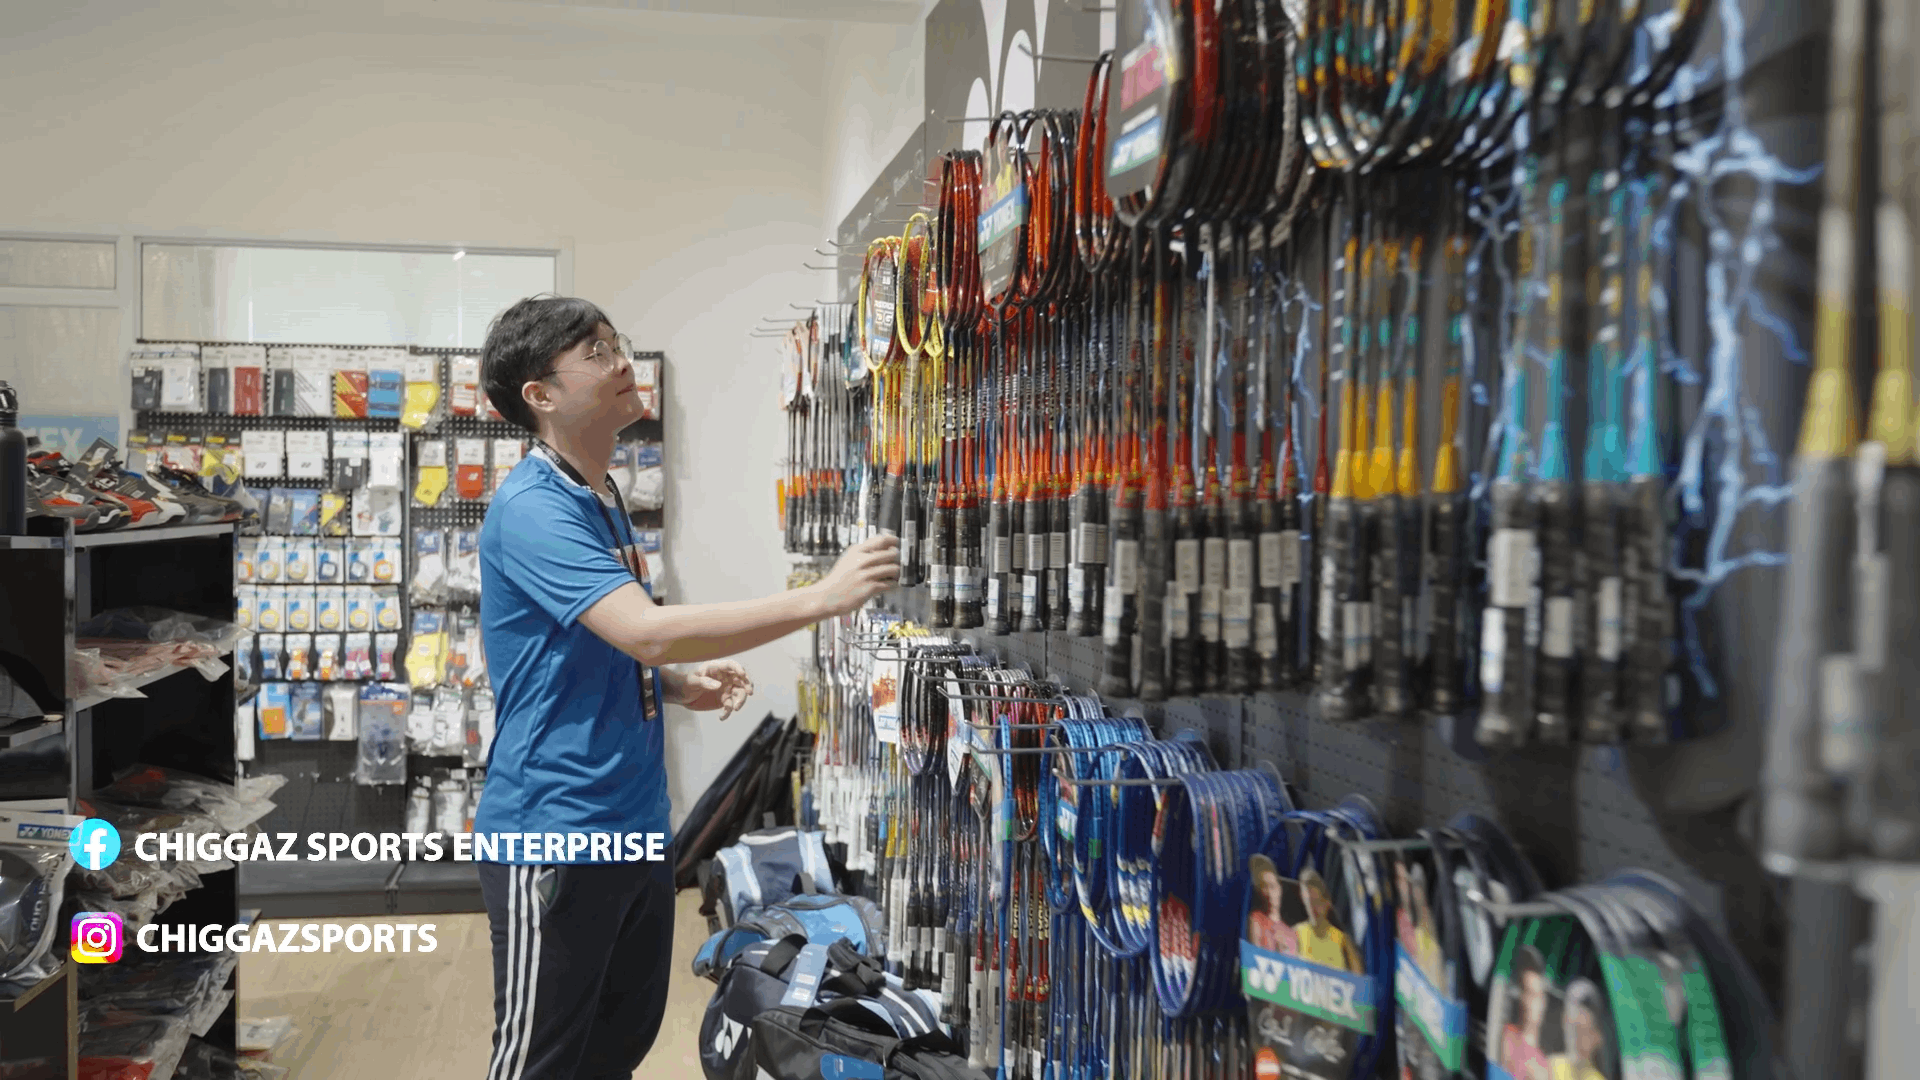 Load video: Hi Guys, its Chiggaz Sports here. Our Shop specialize in selling all kinds of Yonex Badminton Racket ,Grip &amp; Equipment. Feel free to visit us Today~ Shop at - ⛩Chiggaz Sports Enterprise ⛩ ~We base in Miri selling Authentic YONEX, We serve you Best Price &amp; Equipment ~ 📞 Watsapp - https://wa.me/message/Y6NCYJAMUYK3M1 🛒Shopee Link - https://shopee.com.my/chiggazsports?s... Website Link - www.chiggazsports.com 🛩Google Map - Chiggaz Sports Enterprise 016-862 6357 https://goo.gl/maps/EFv76wXVcVRcTPLY9 🛬Waze:Chiggaz Sports Enterprise https://waze.com/ul/hw8c16fjdc 📱Instagram Link- https://instagram.com/chiggazsports?u... #yonex #chiggaz #badminton #miri #brunei #malaysia